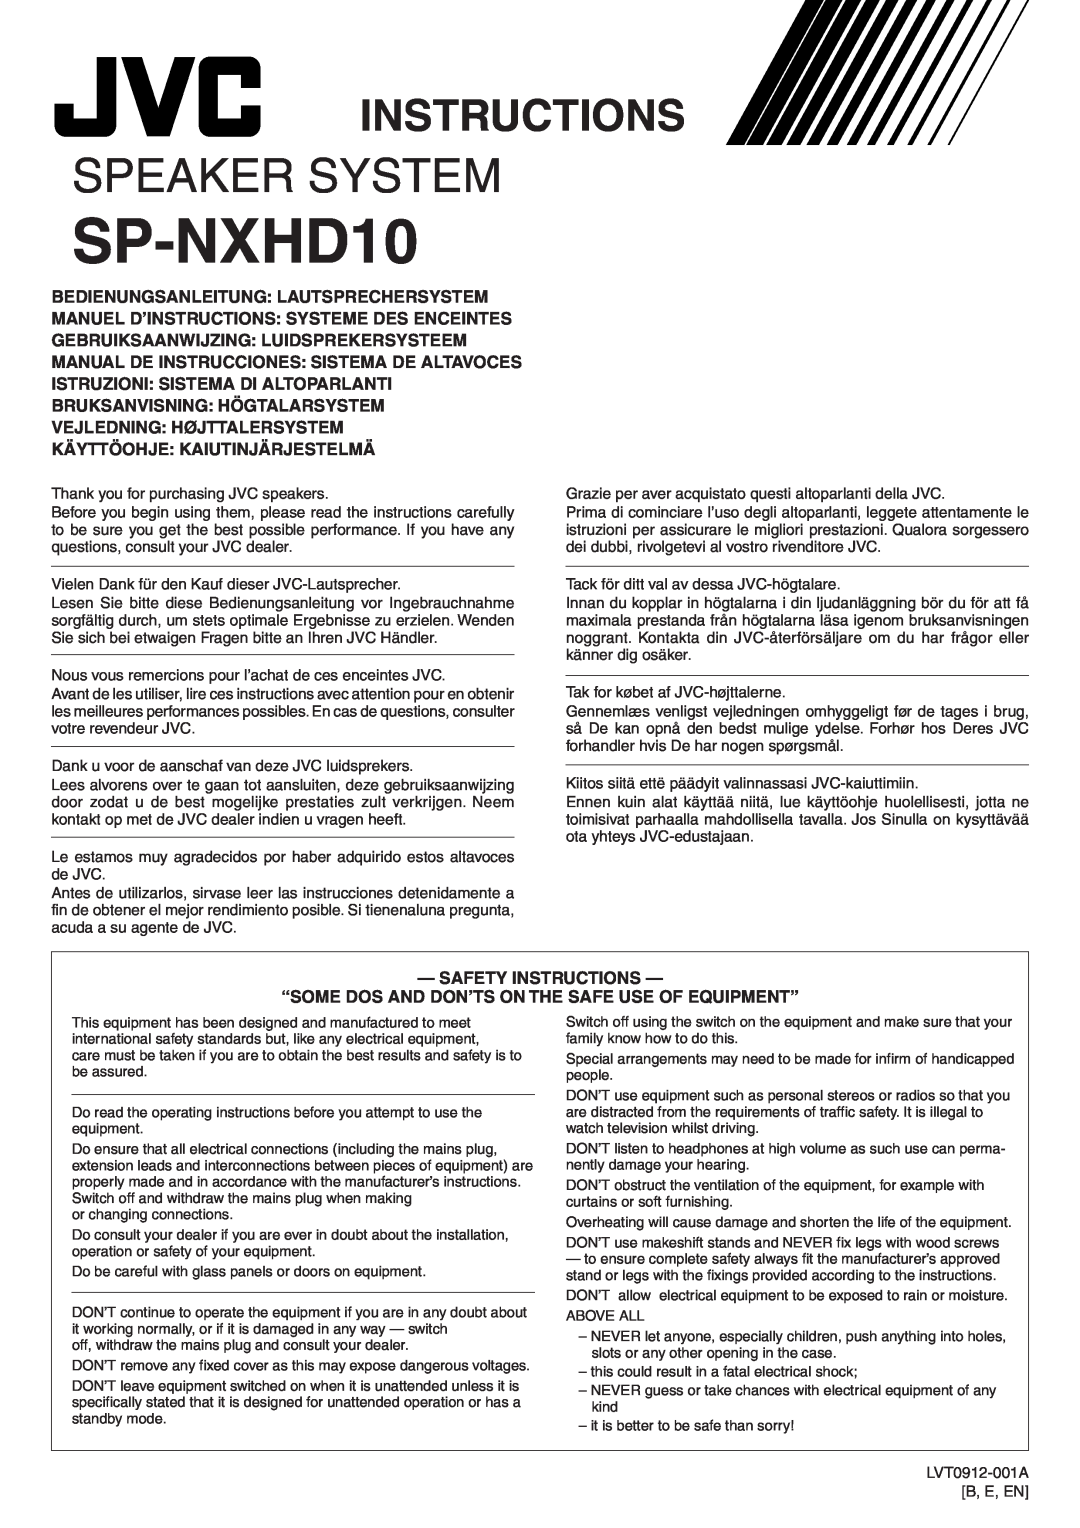 JVC CA-NXHD10R manual Bedienungsanleitung: Lautsprechersystem, Manuel D’Instructions: Systeme Des Enceintes, SP-NXHD10 